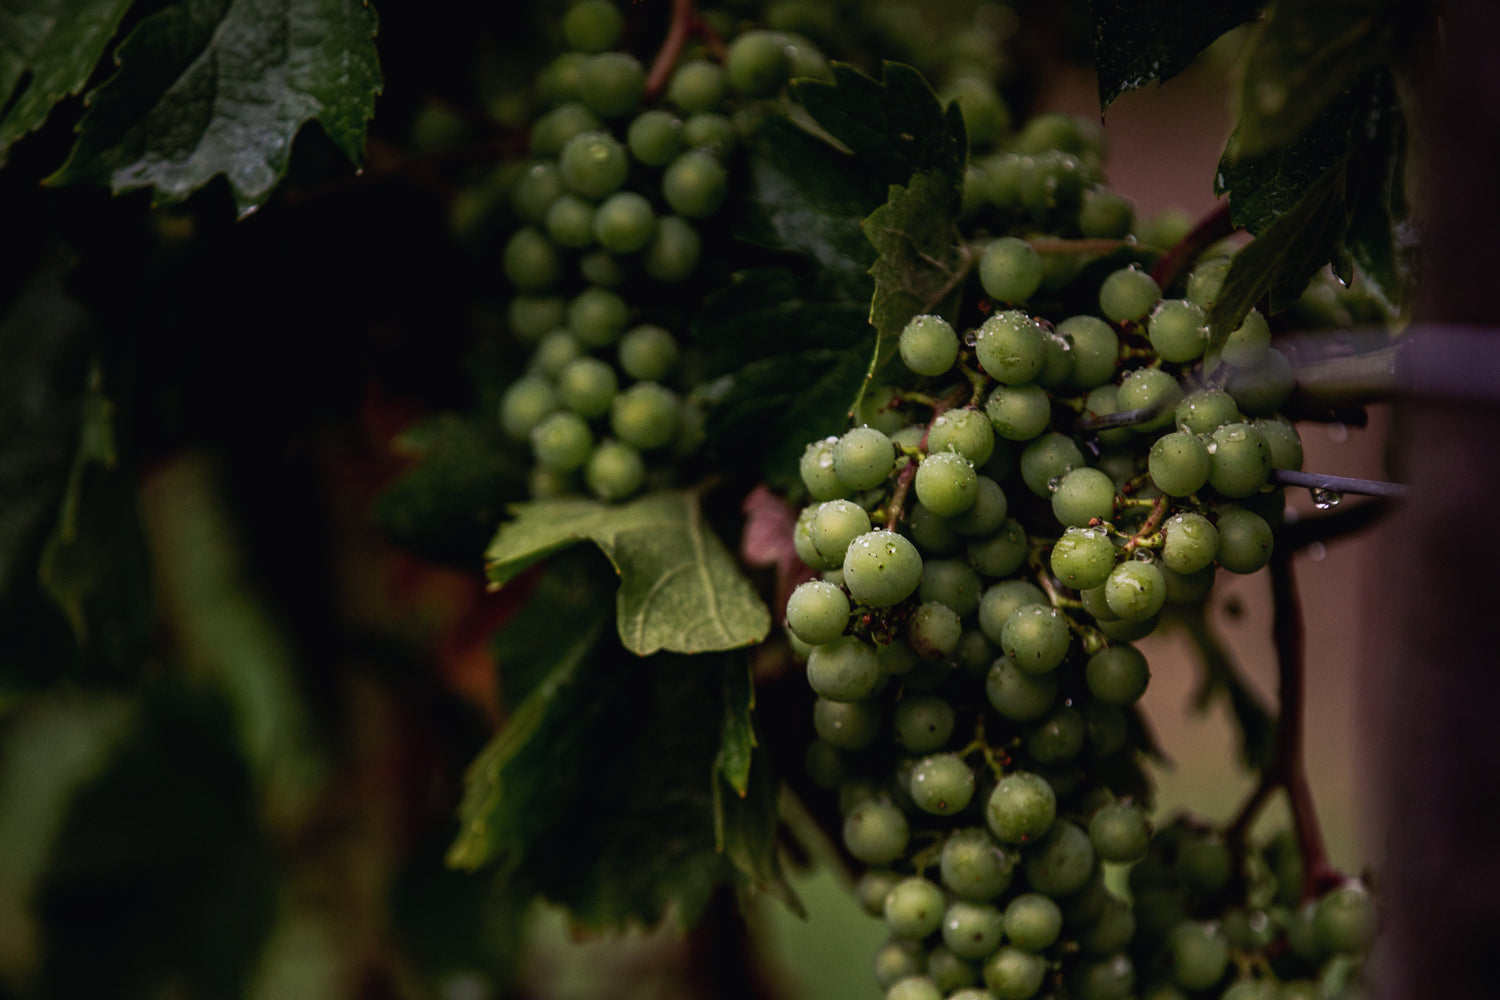 Dark moody image of durella grapes